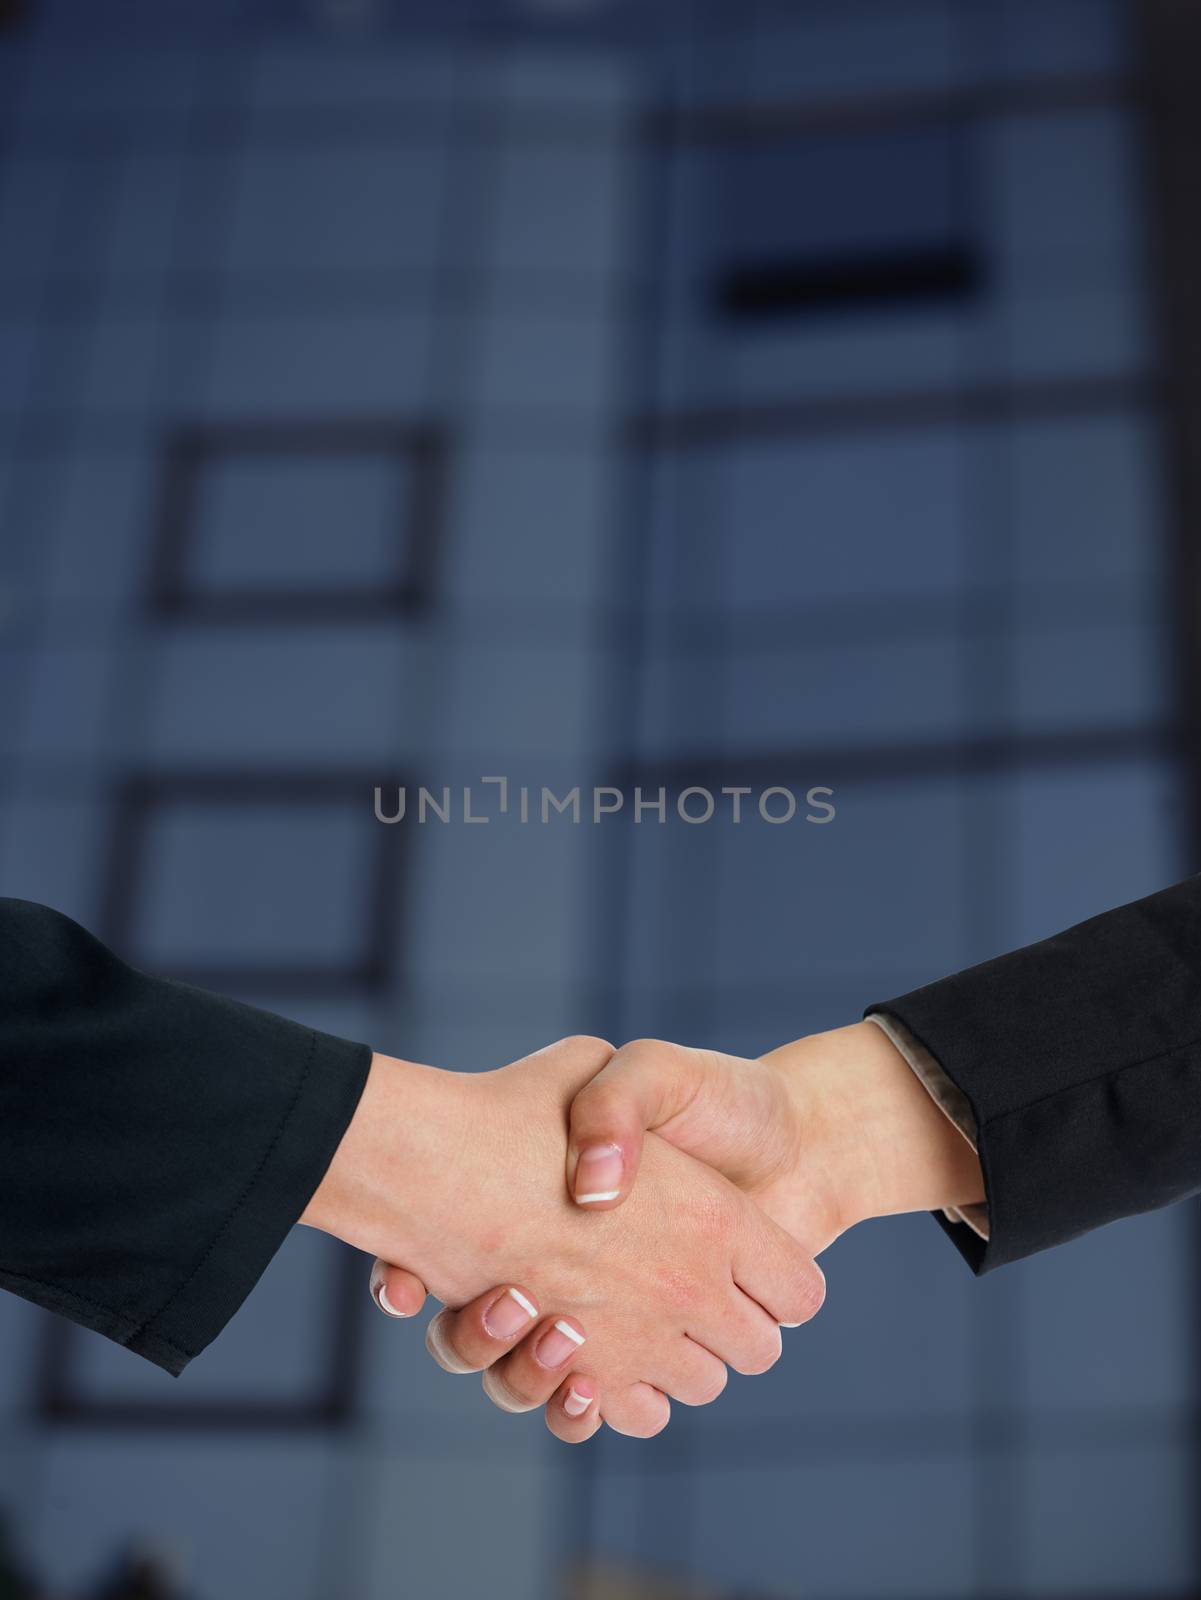 Handshake Handshaking and blured building in background